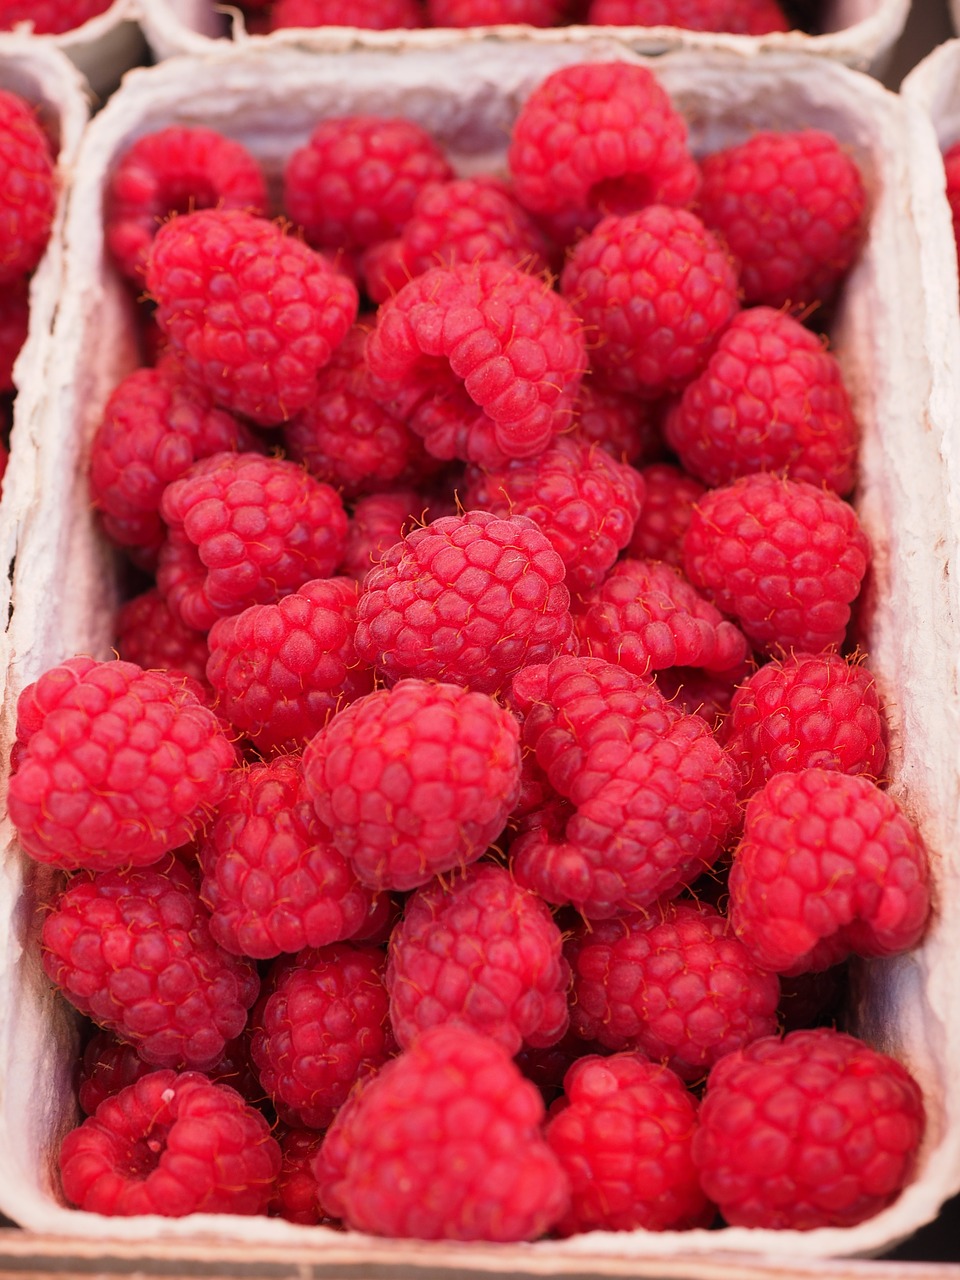 raspberries berries fruits free photo